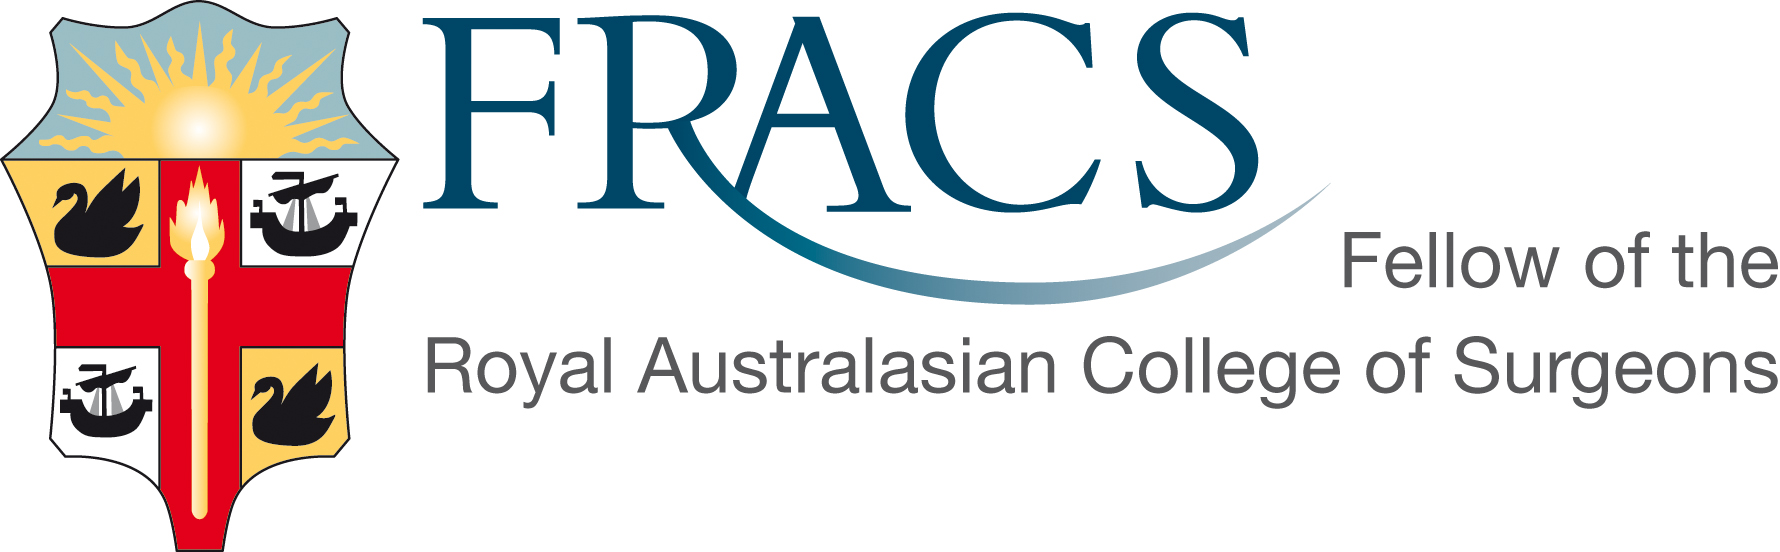 FRACS Logo_A RGB.jpg